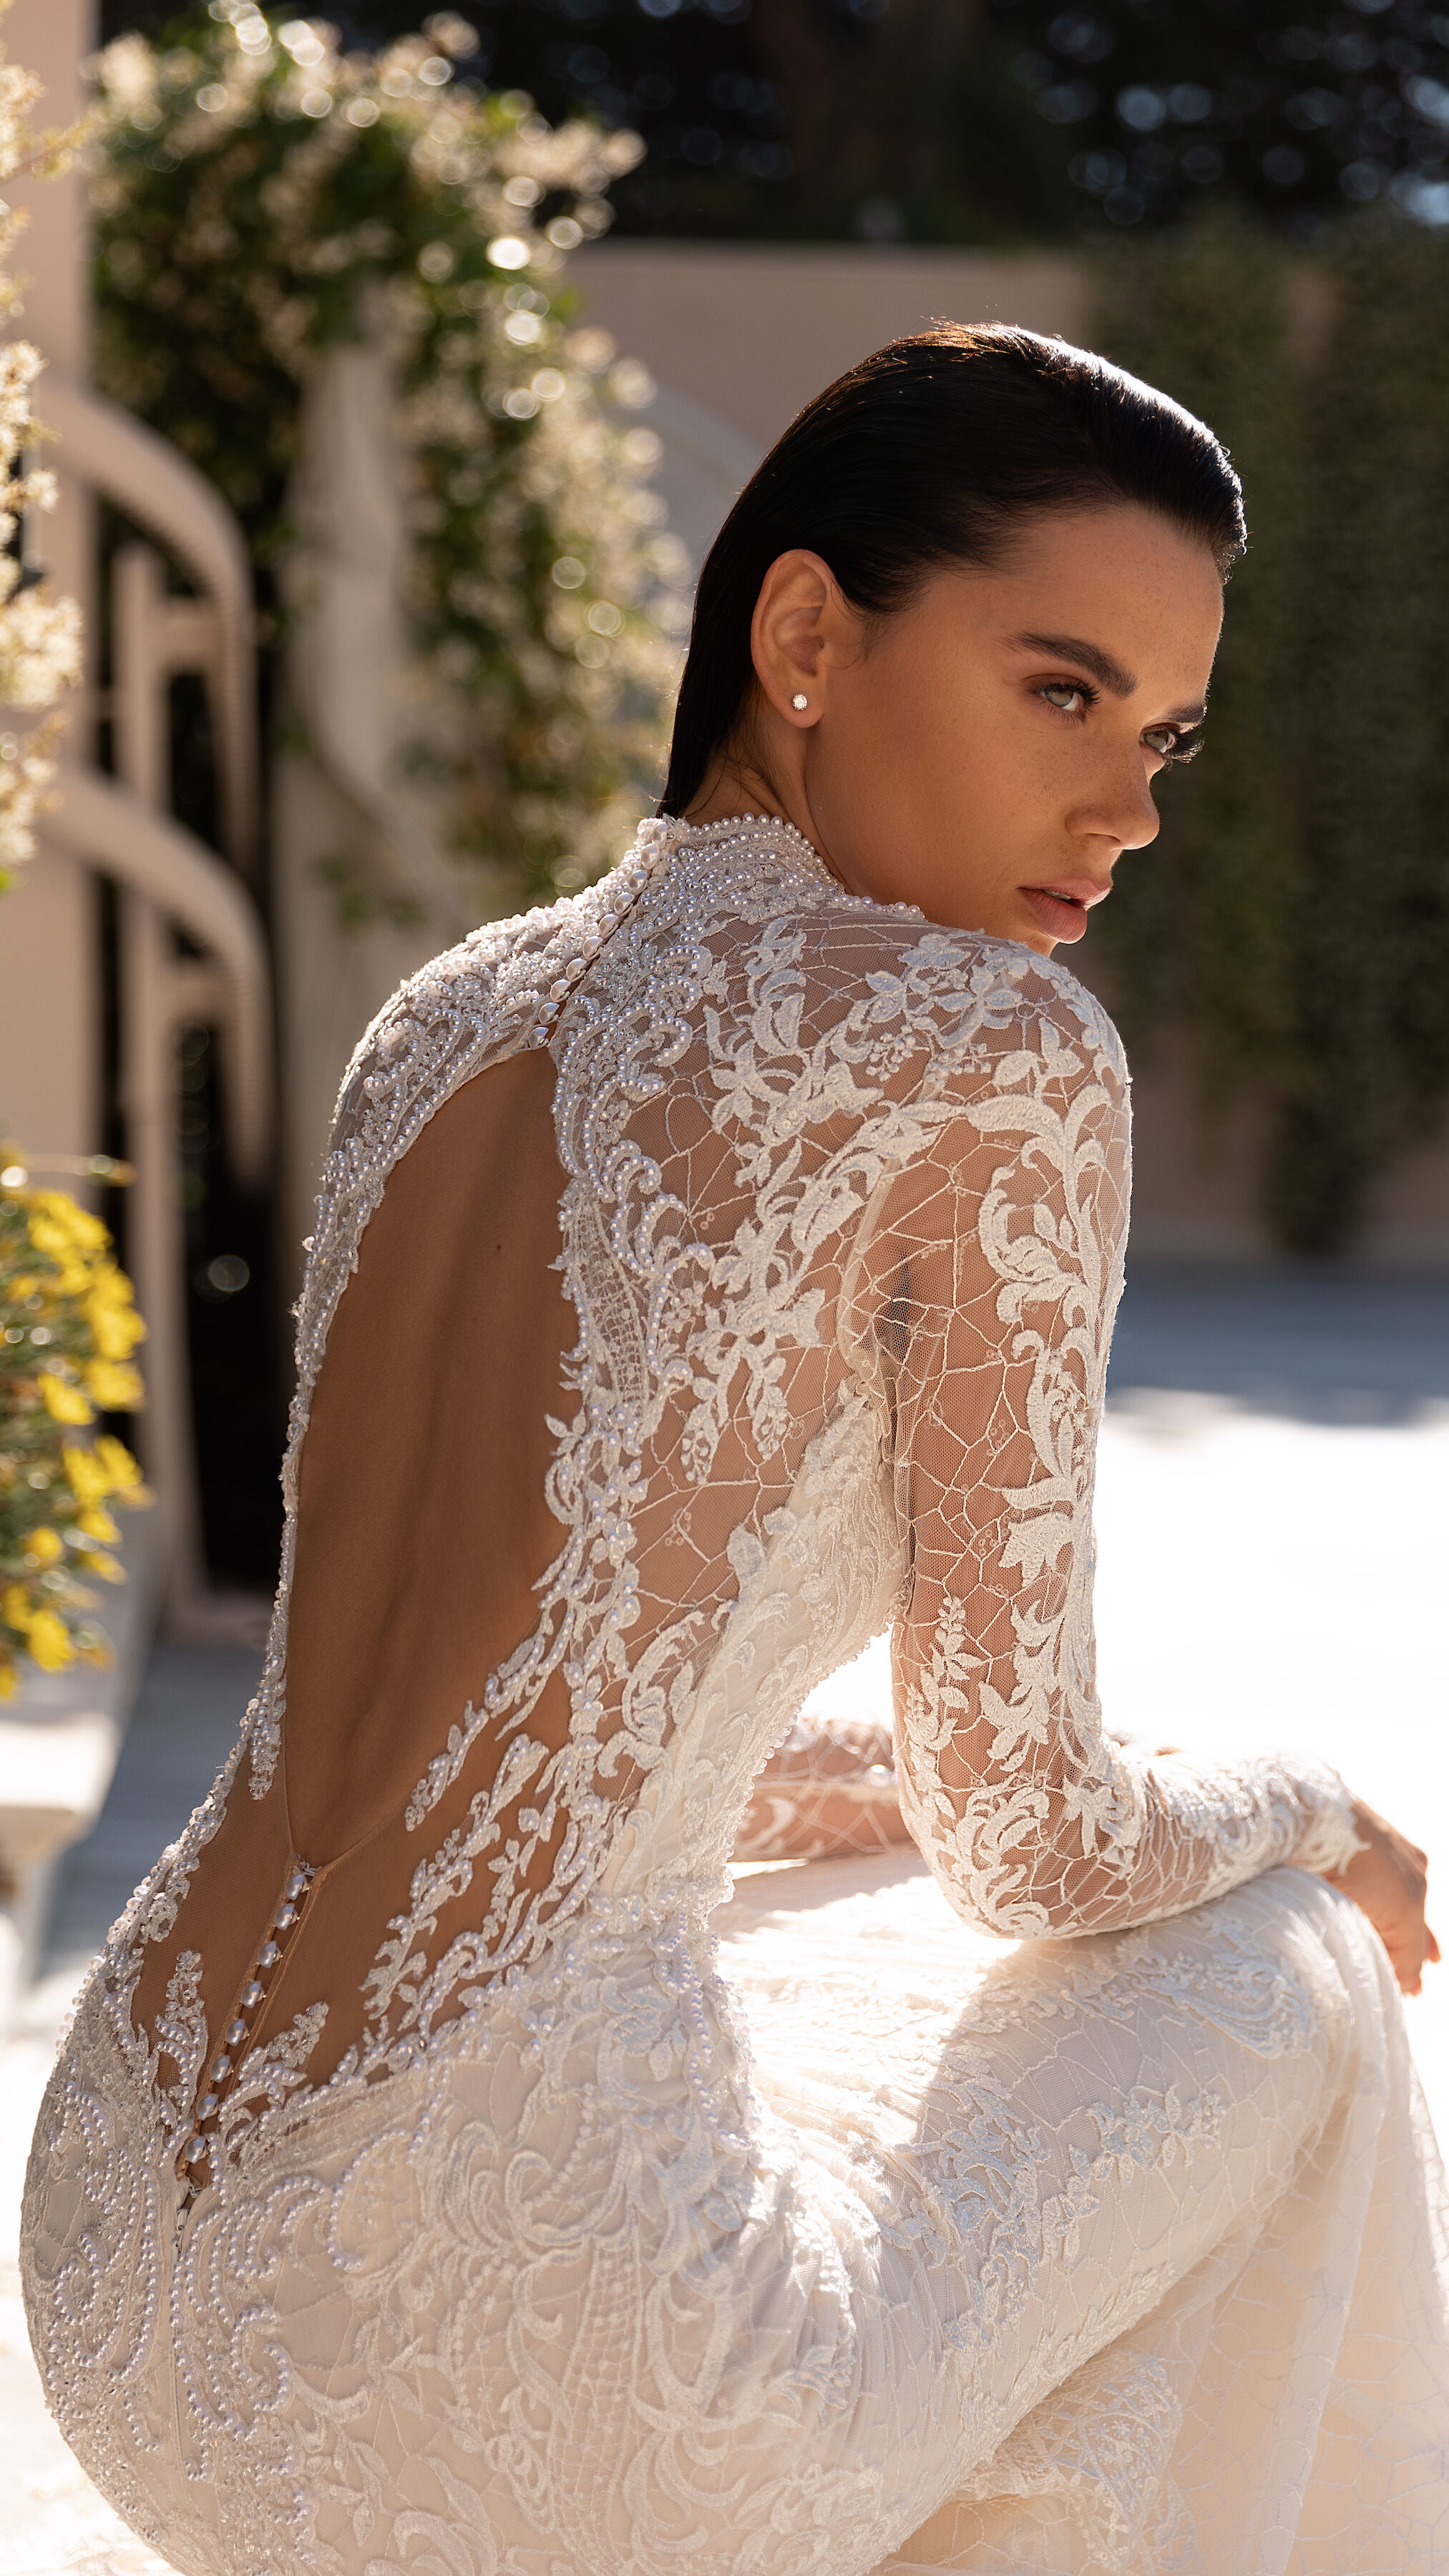 Miruma by Ida Torez wedding dress - Top 2022 Bridal Trends Featuring Ukrainian Designers